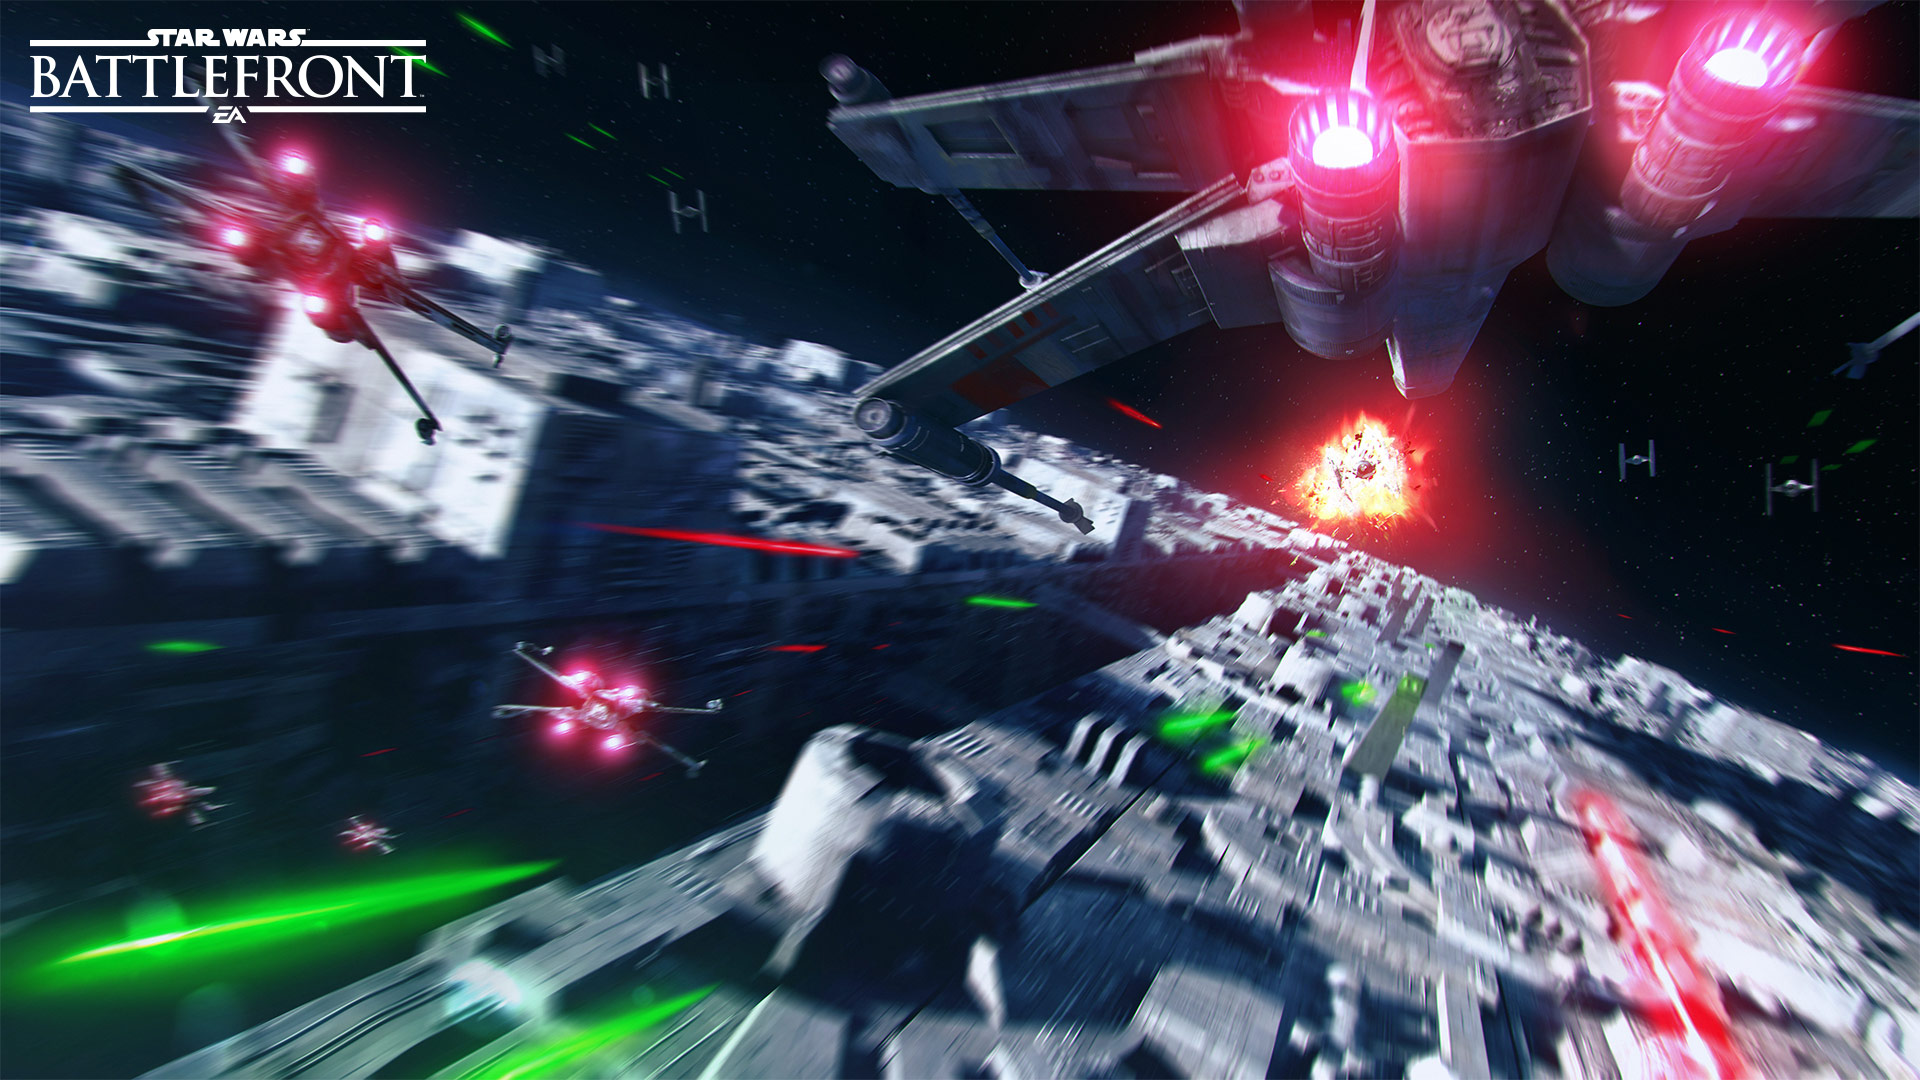 Star Wars Battlefront: Death Star - screenshot 2